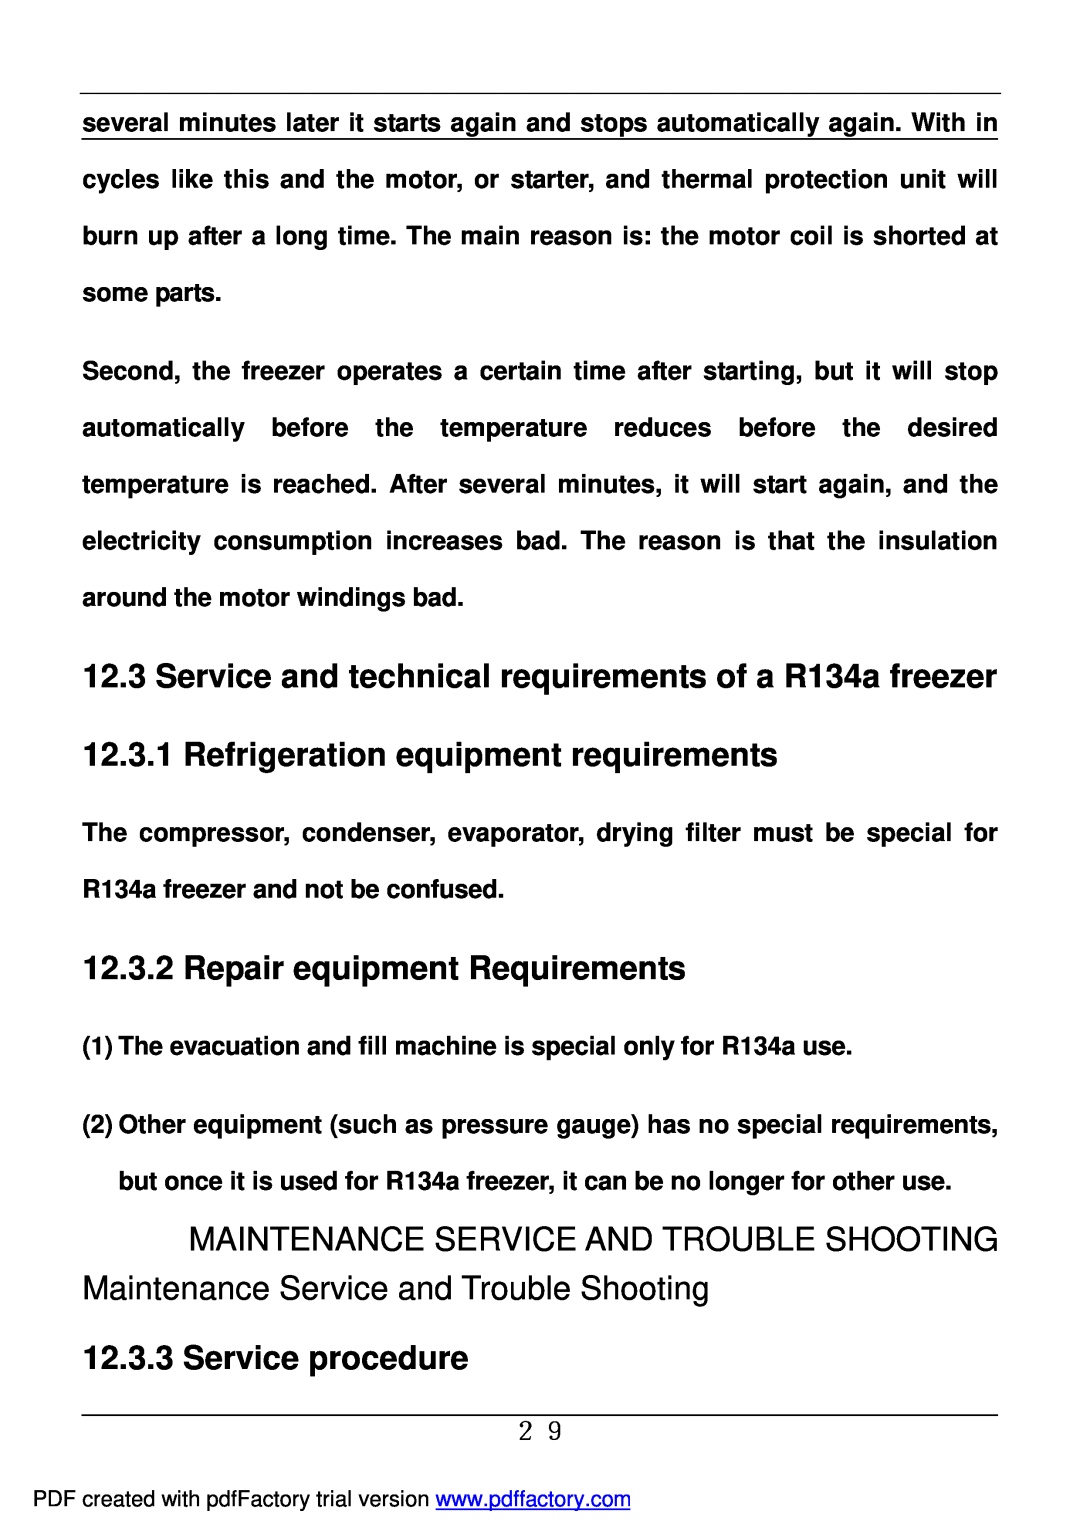 Haier BD-478A service manual Repair equipment Requirements, Service procedure 